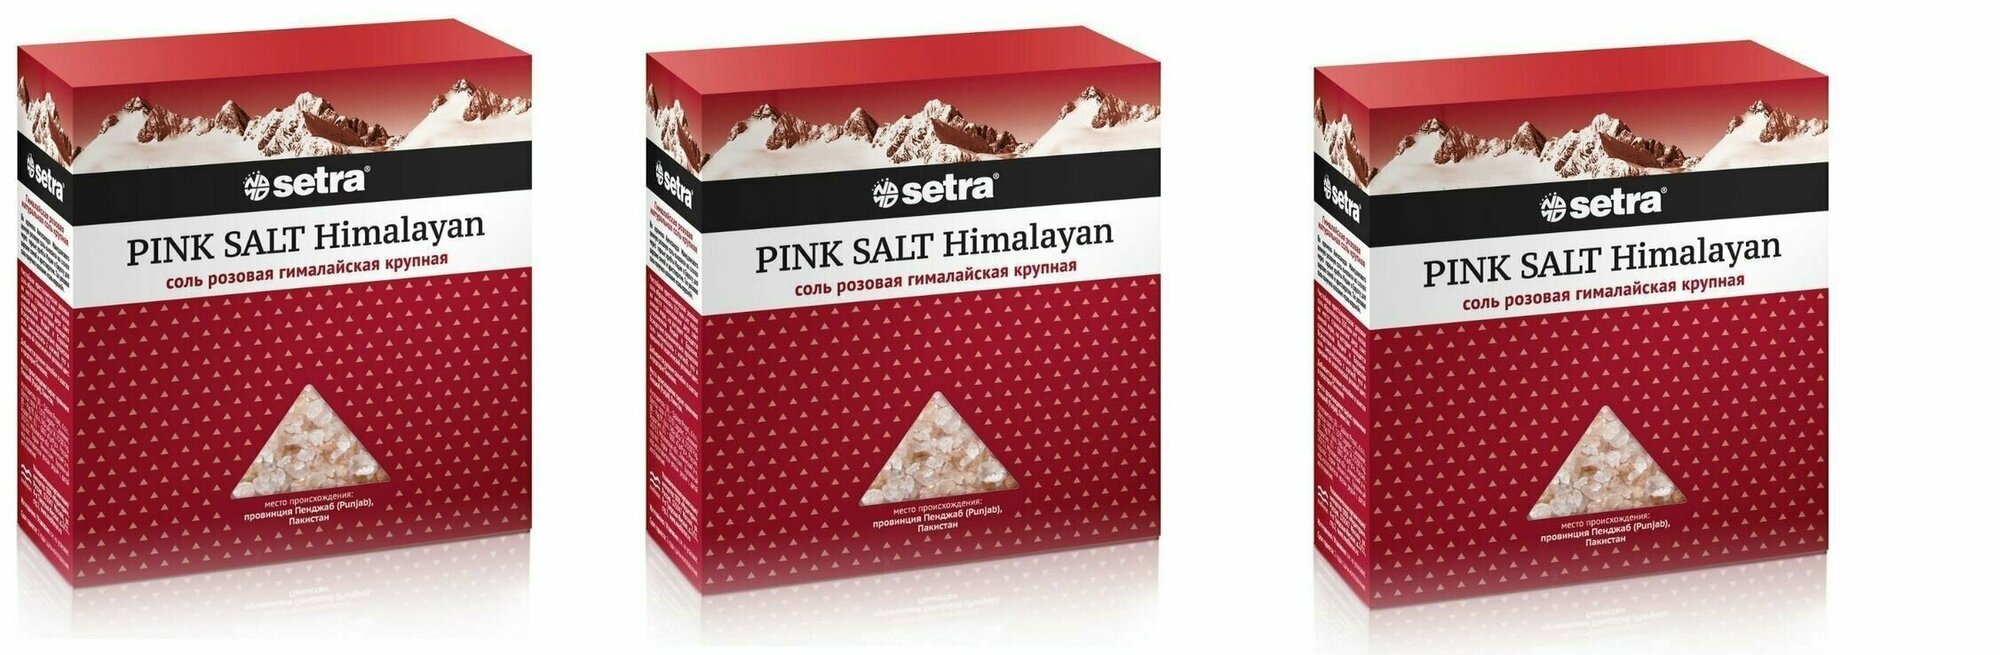 Соль Setra, Гималайская, розовая, натуральная, крупная, 500 г, 3 уп